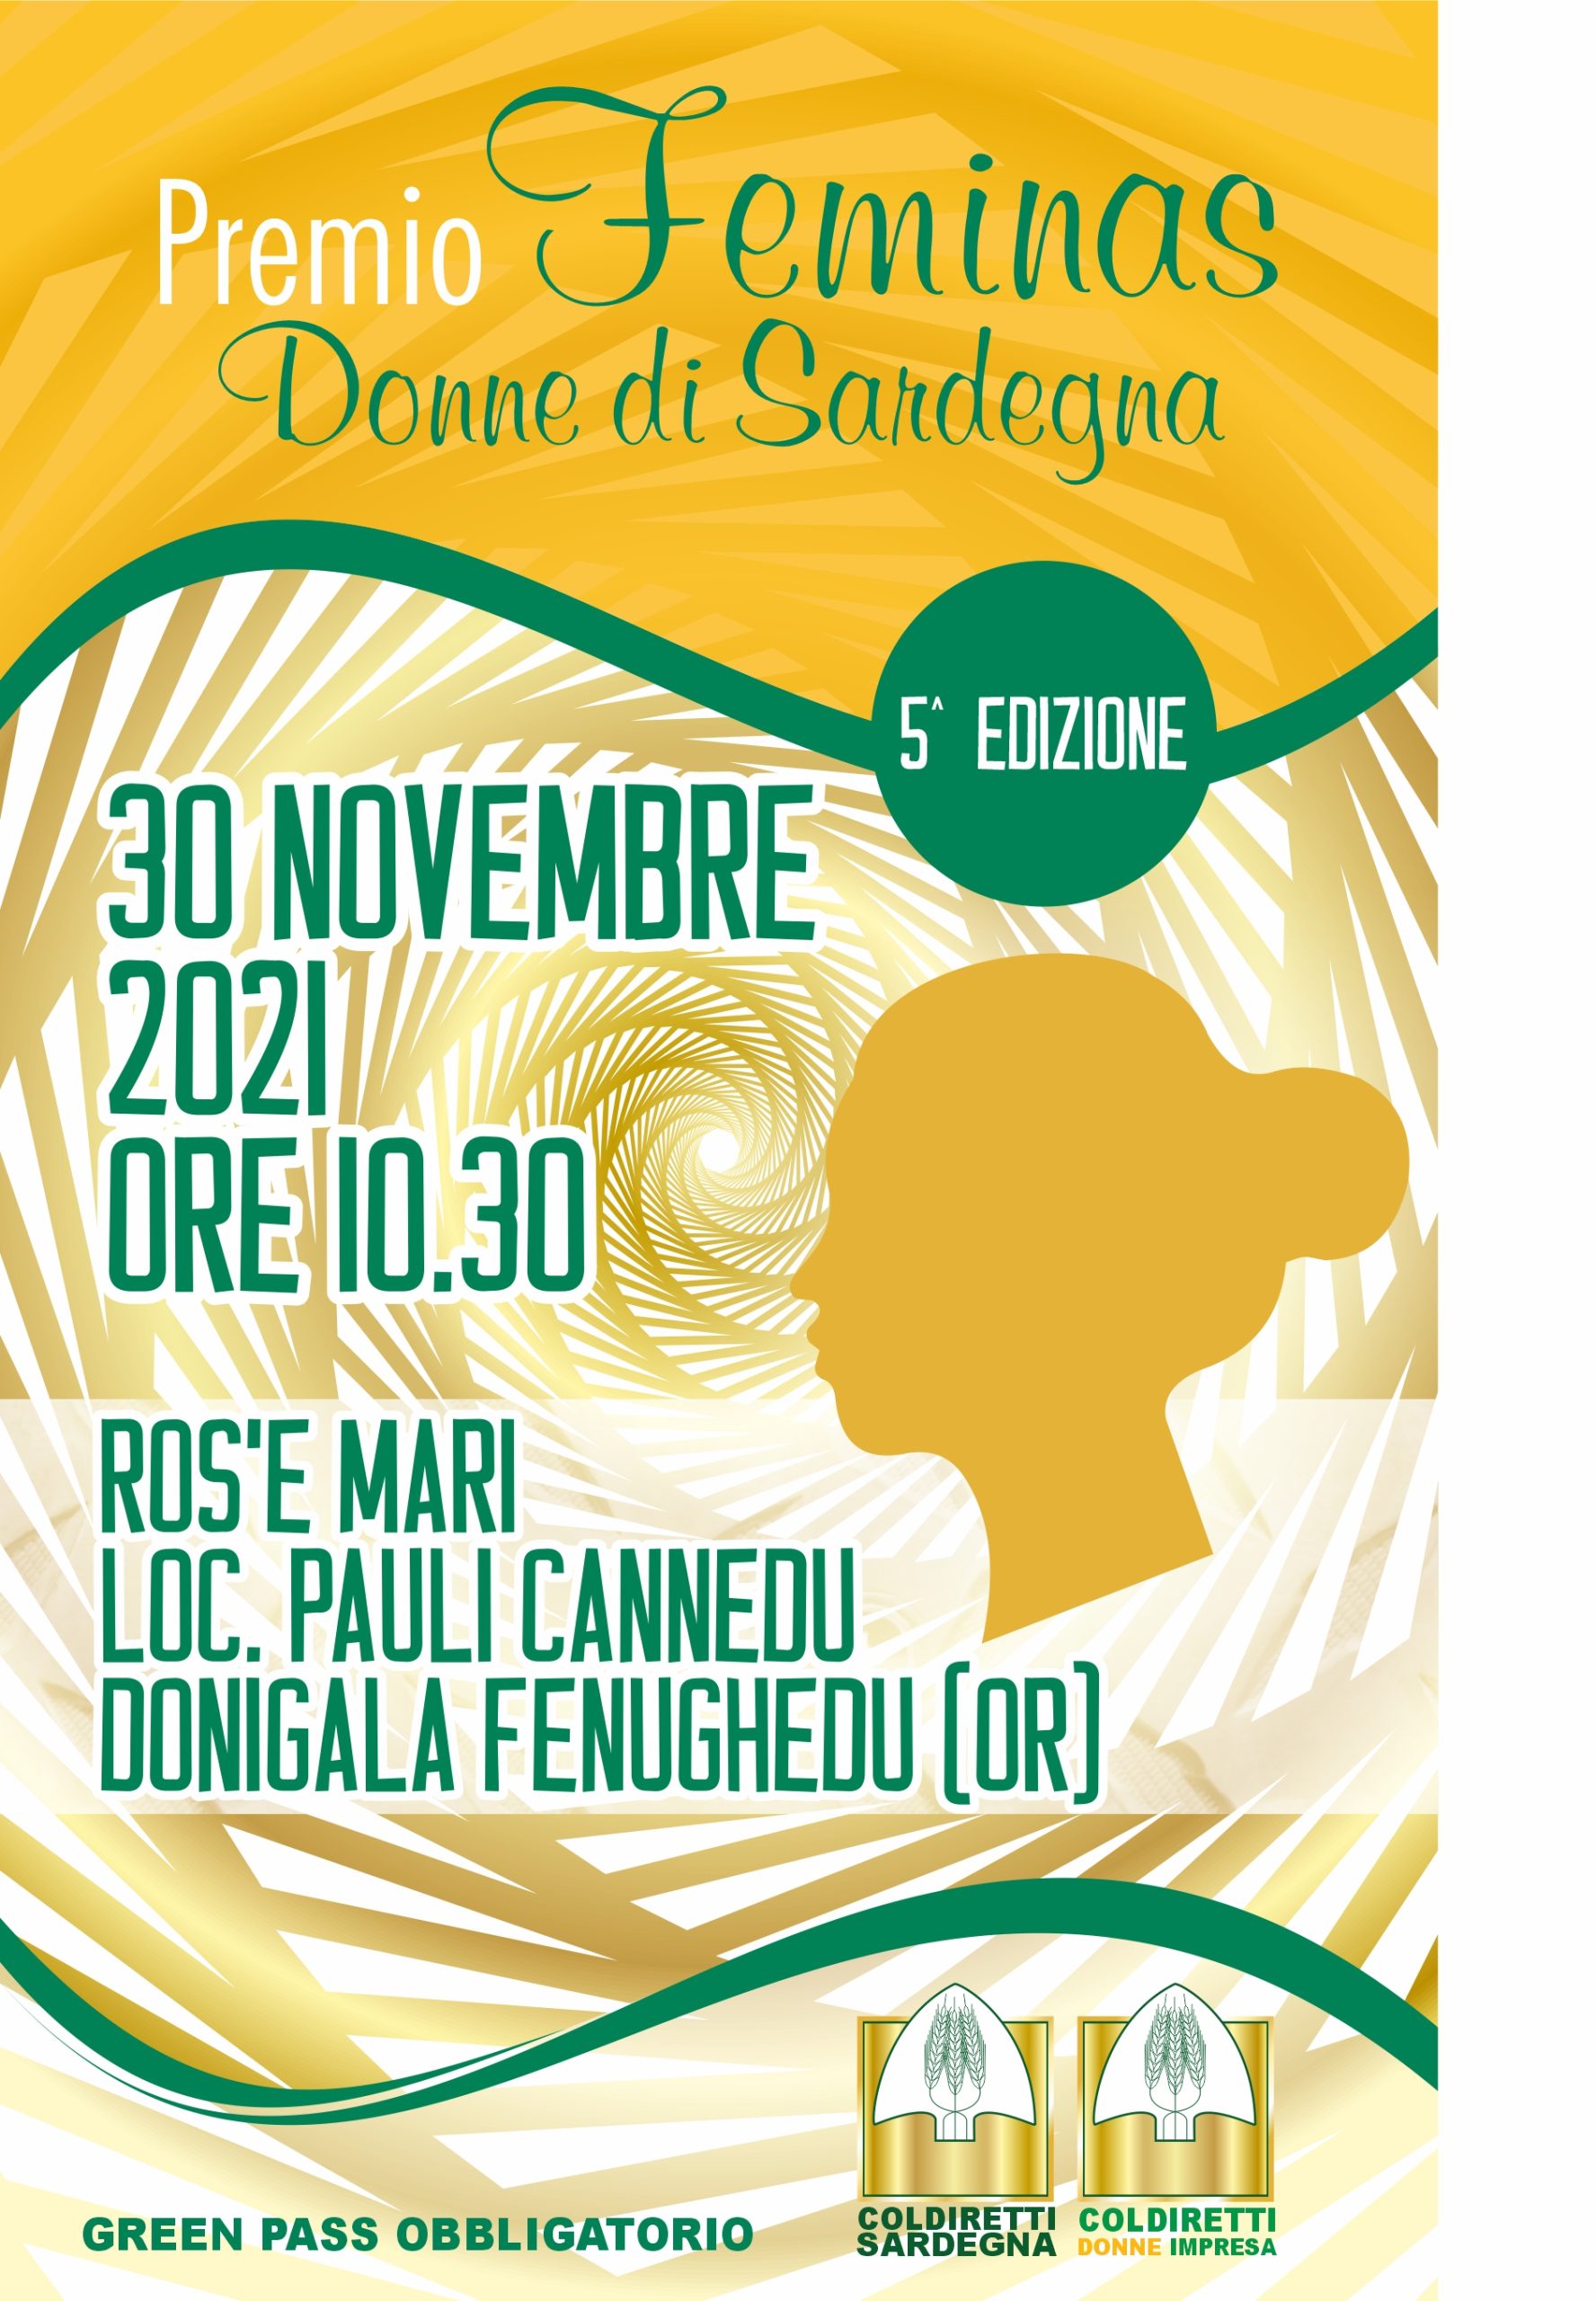 30 novembre 2021 Premio Feminas Donne di Sardegna